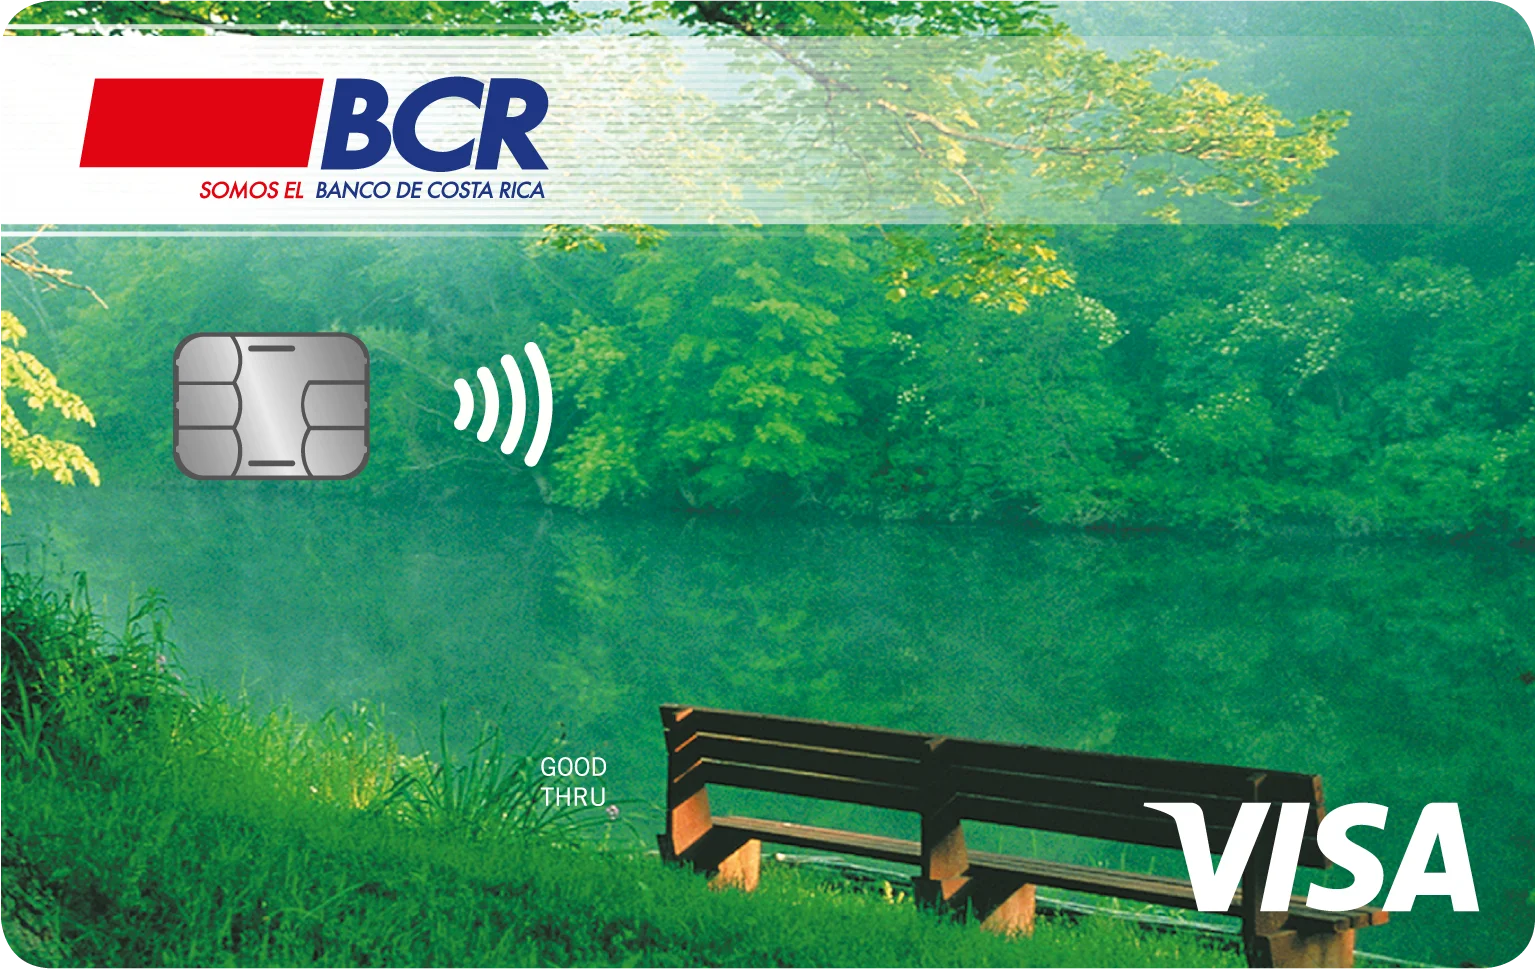 Imagen de la tarjeta de débito Visa Pensionados